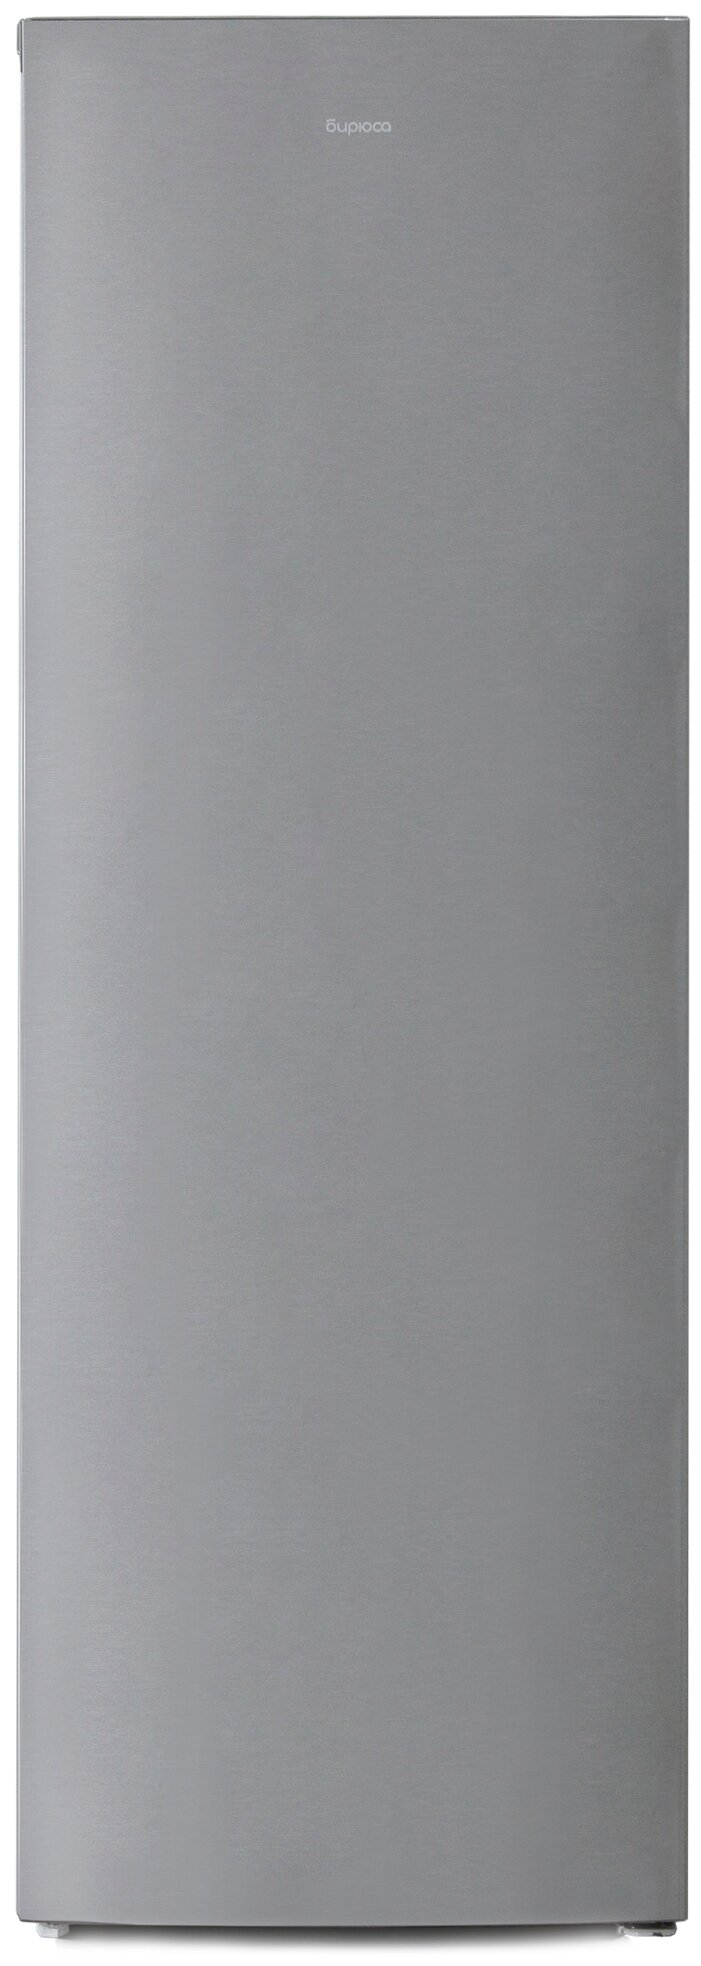 Морозильник Бирюса 6047SN, серебристый металлопласт